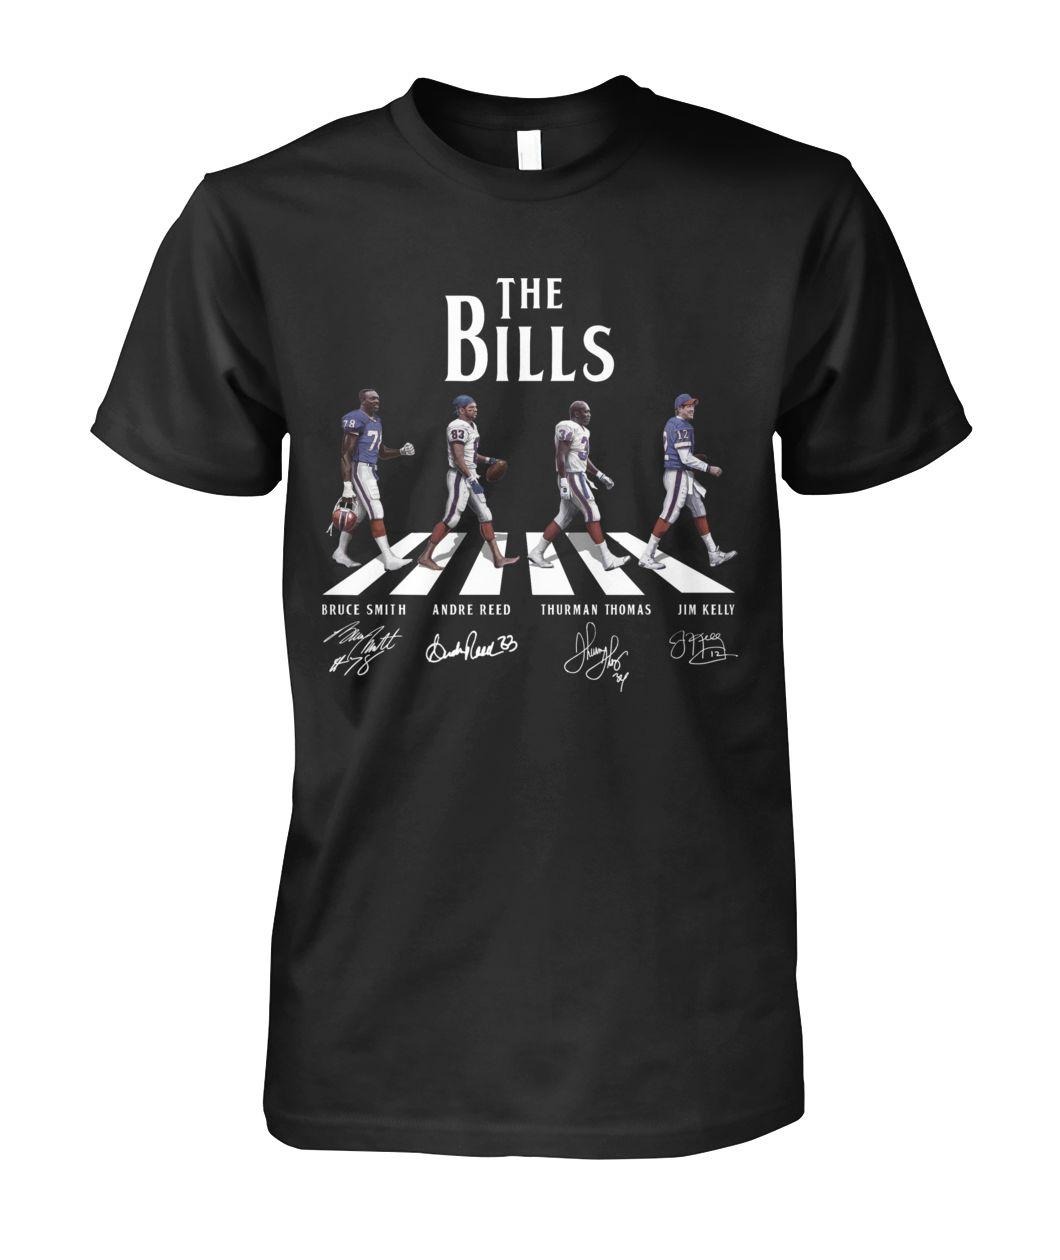 The Bills abbey road shirts